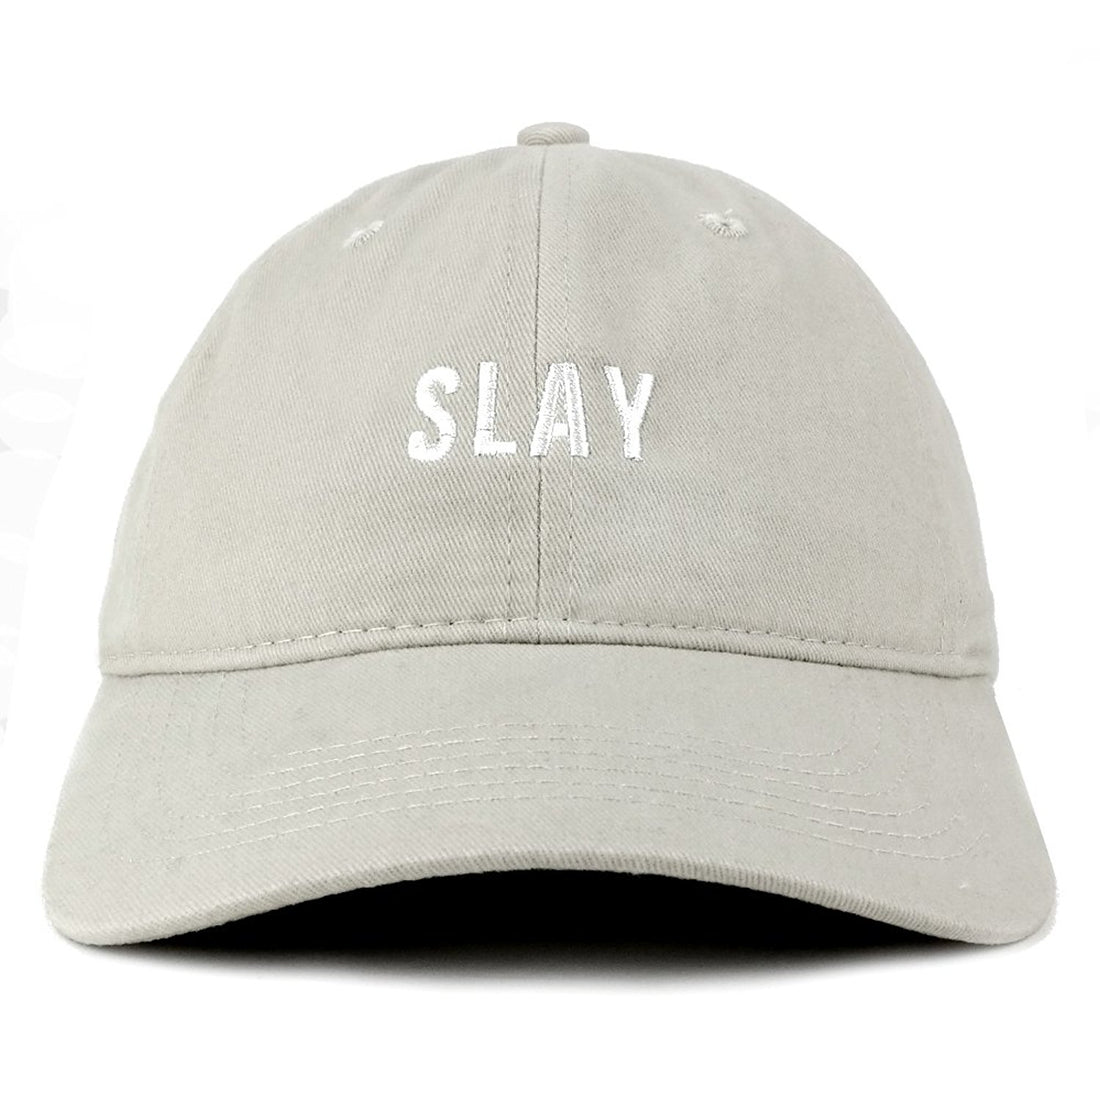 Trendy Apparel Shop Slay Embroidered 100% Cotton Adjustable Cap Dad Hat